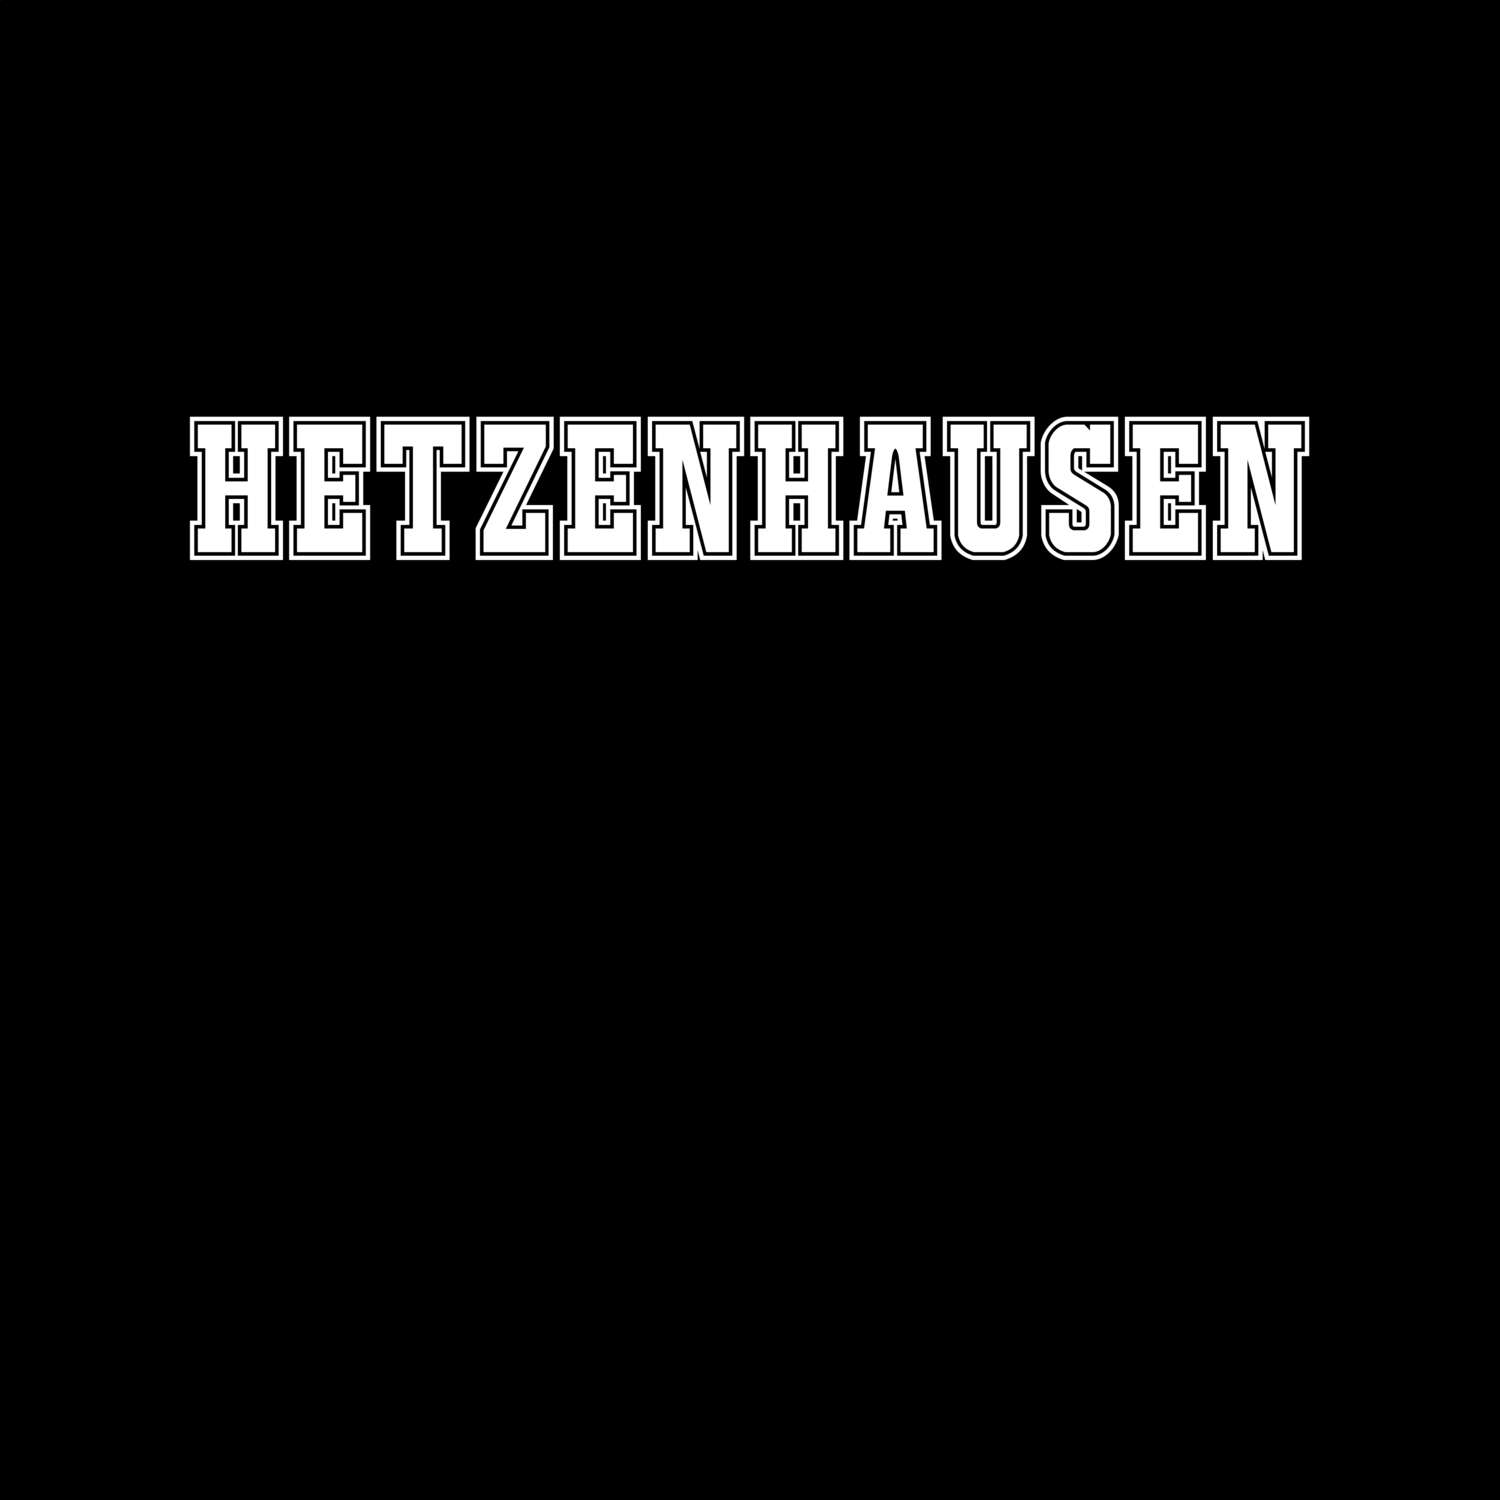 Hetzenhausen T-Shirt »Classic«